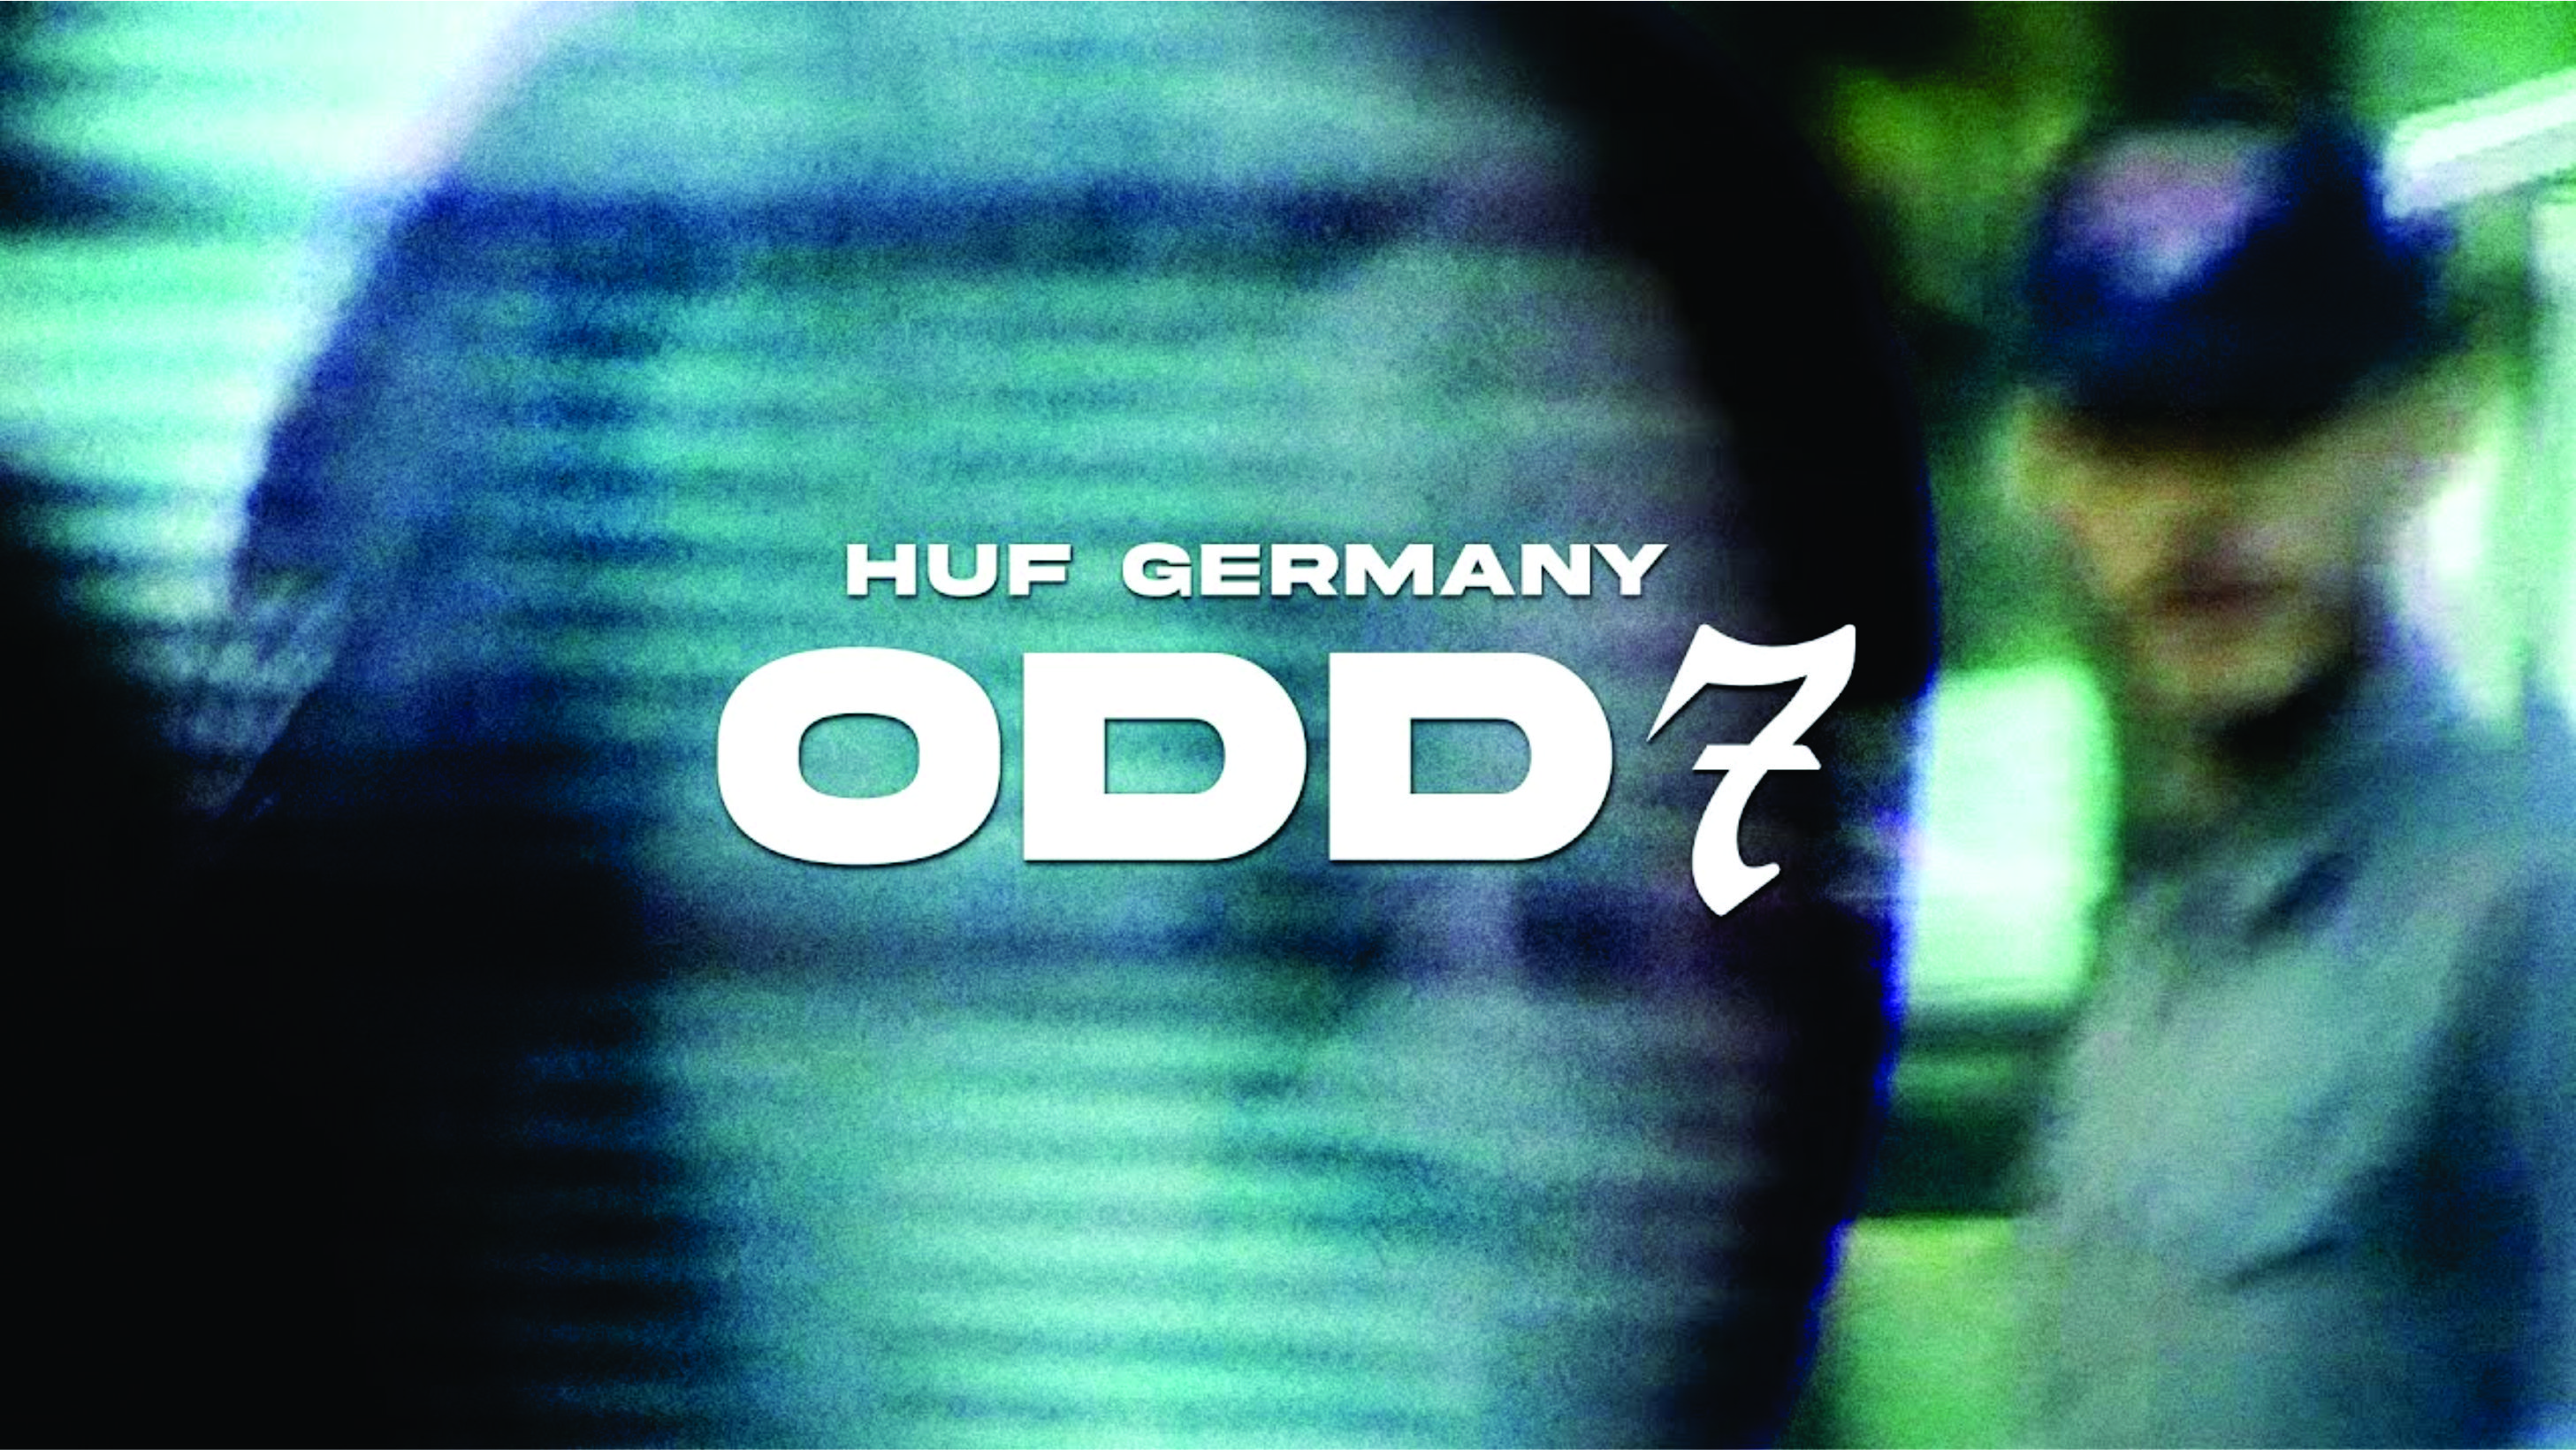 HUF Germany - ODD7 cover